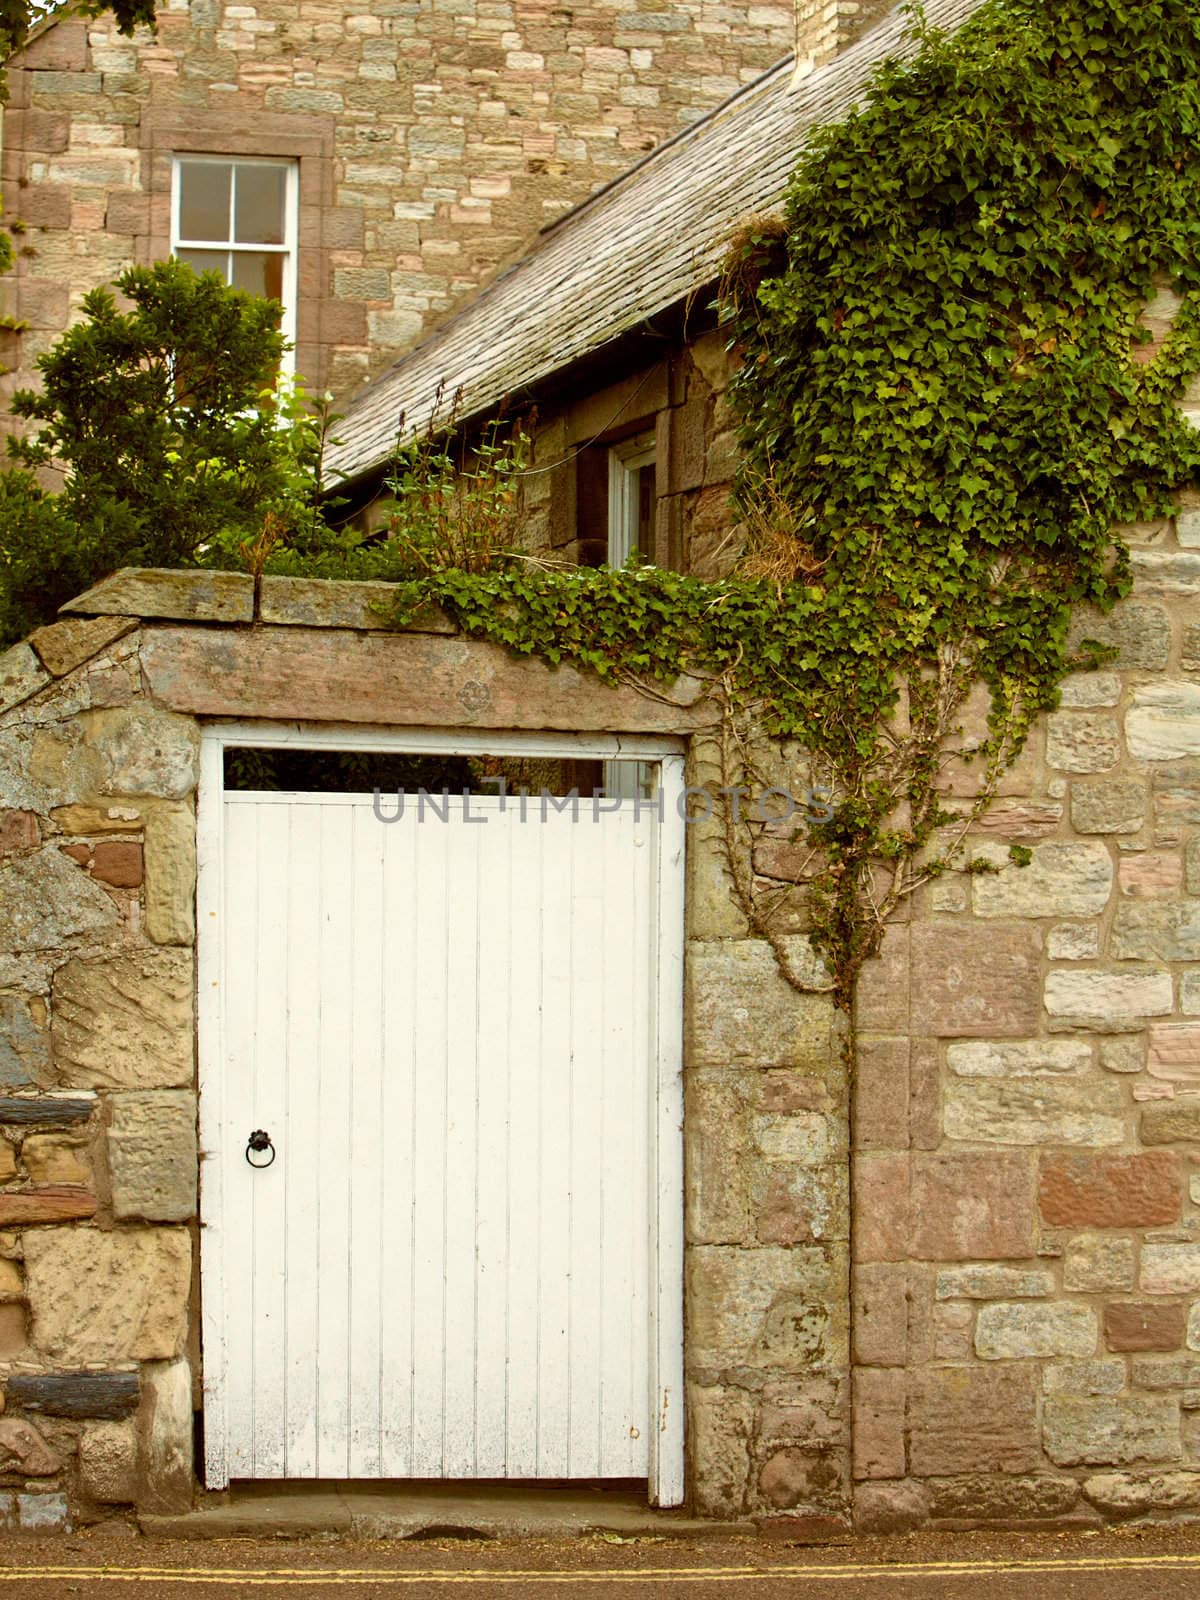 Entrance door, England or Scotland
